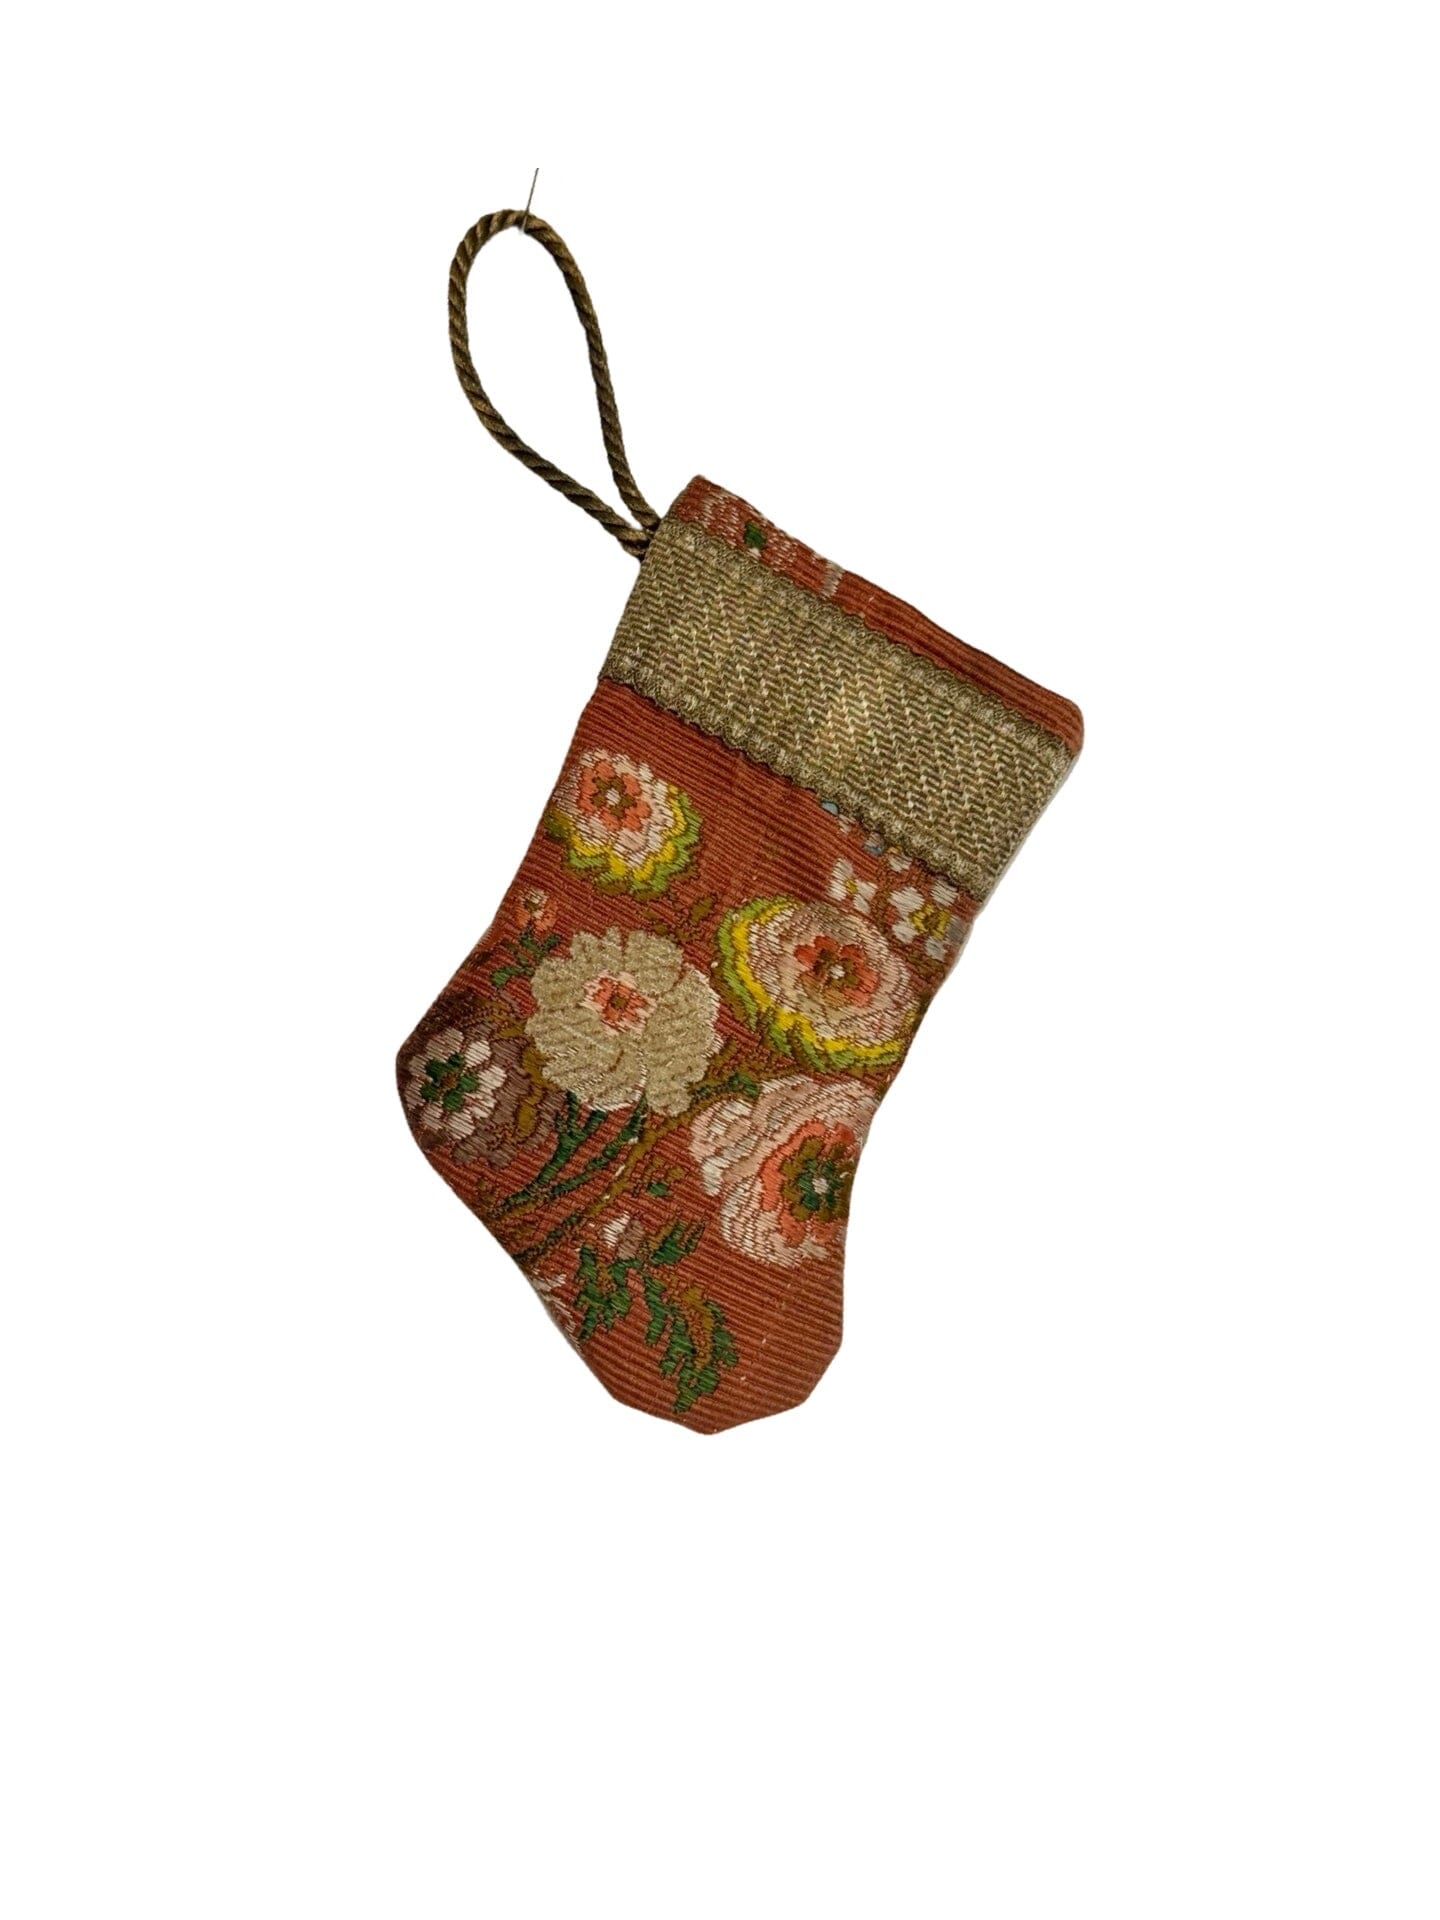 Handmade Mini Stocking Made From Vintage Fabric and Trims- Bronze Rose Floral Ornament B. Viz Design M 